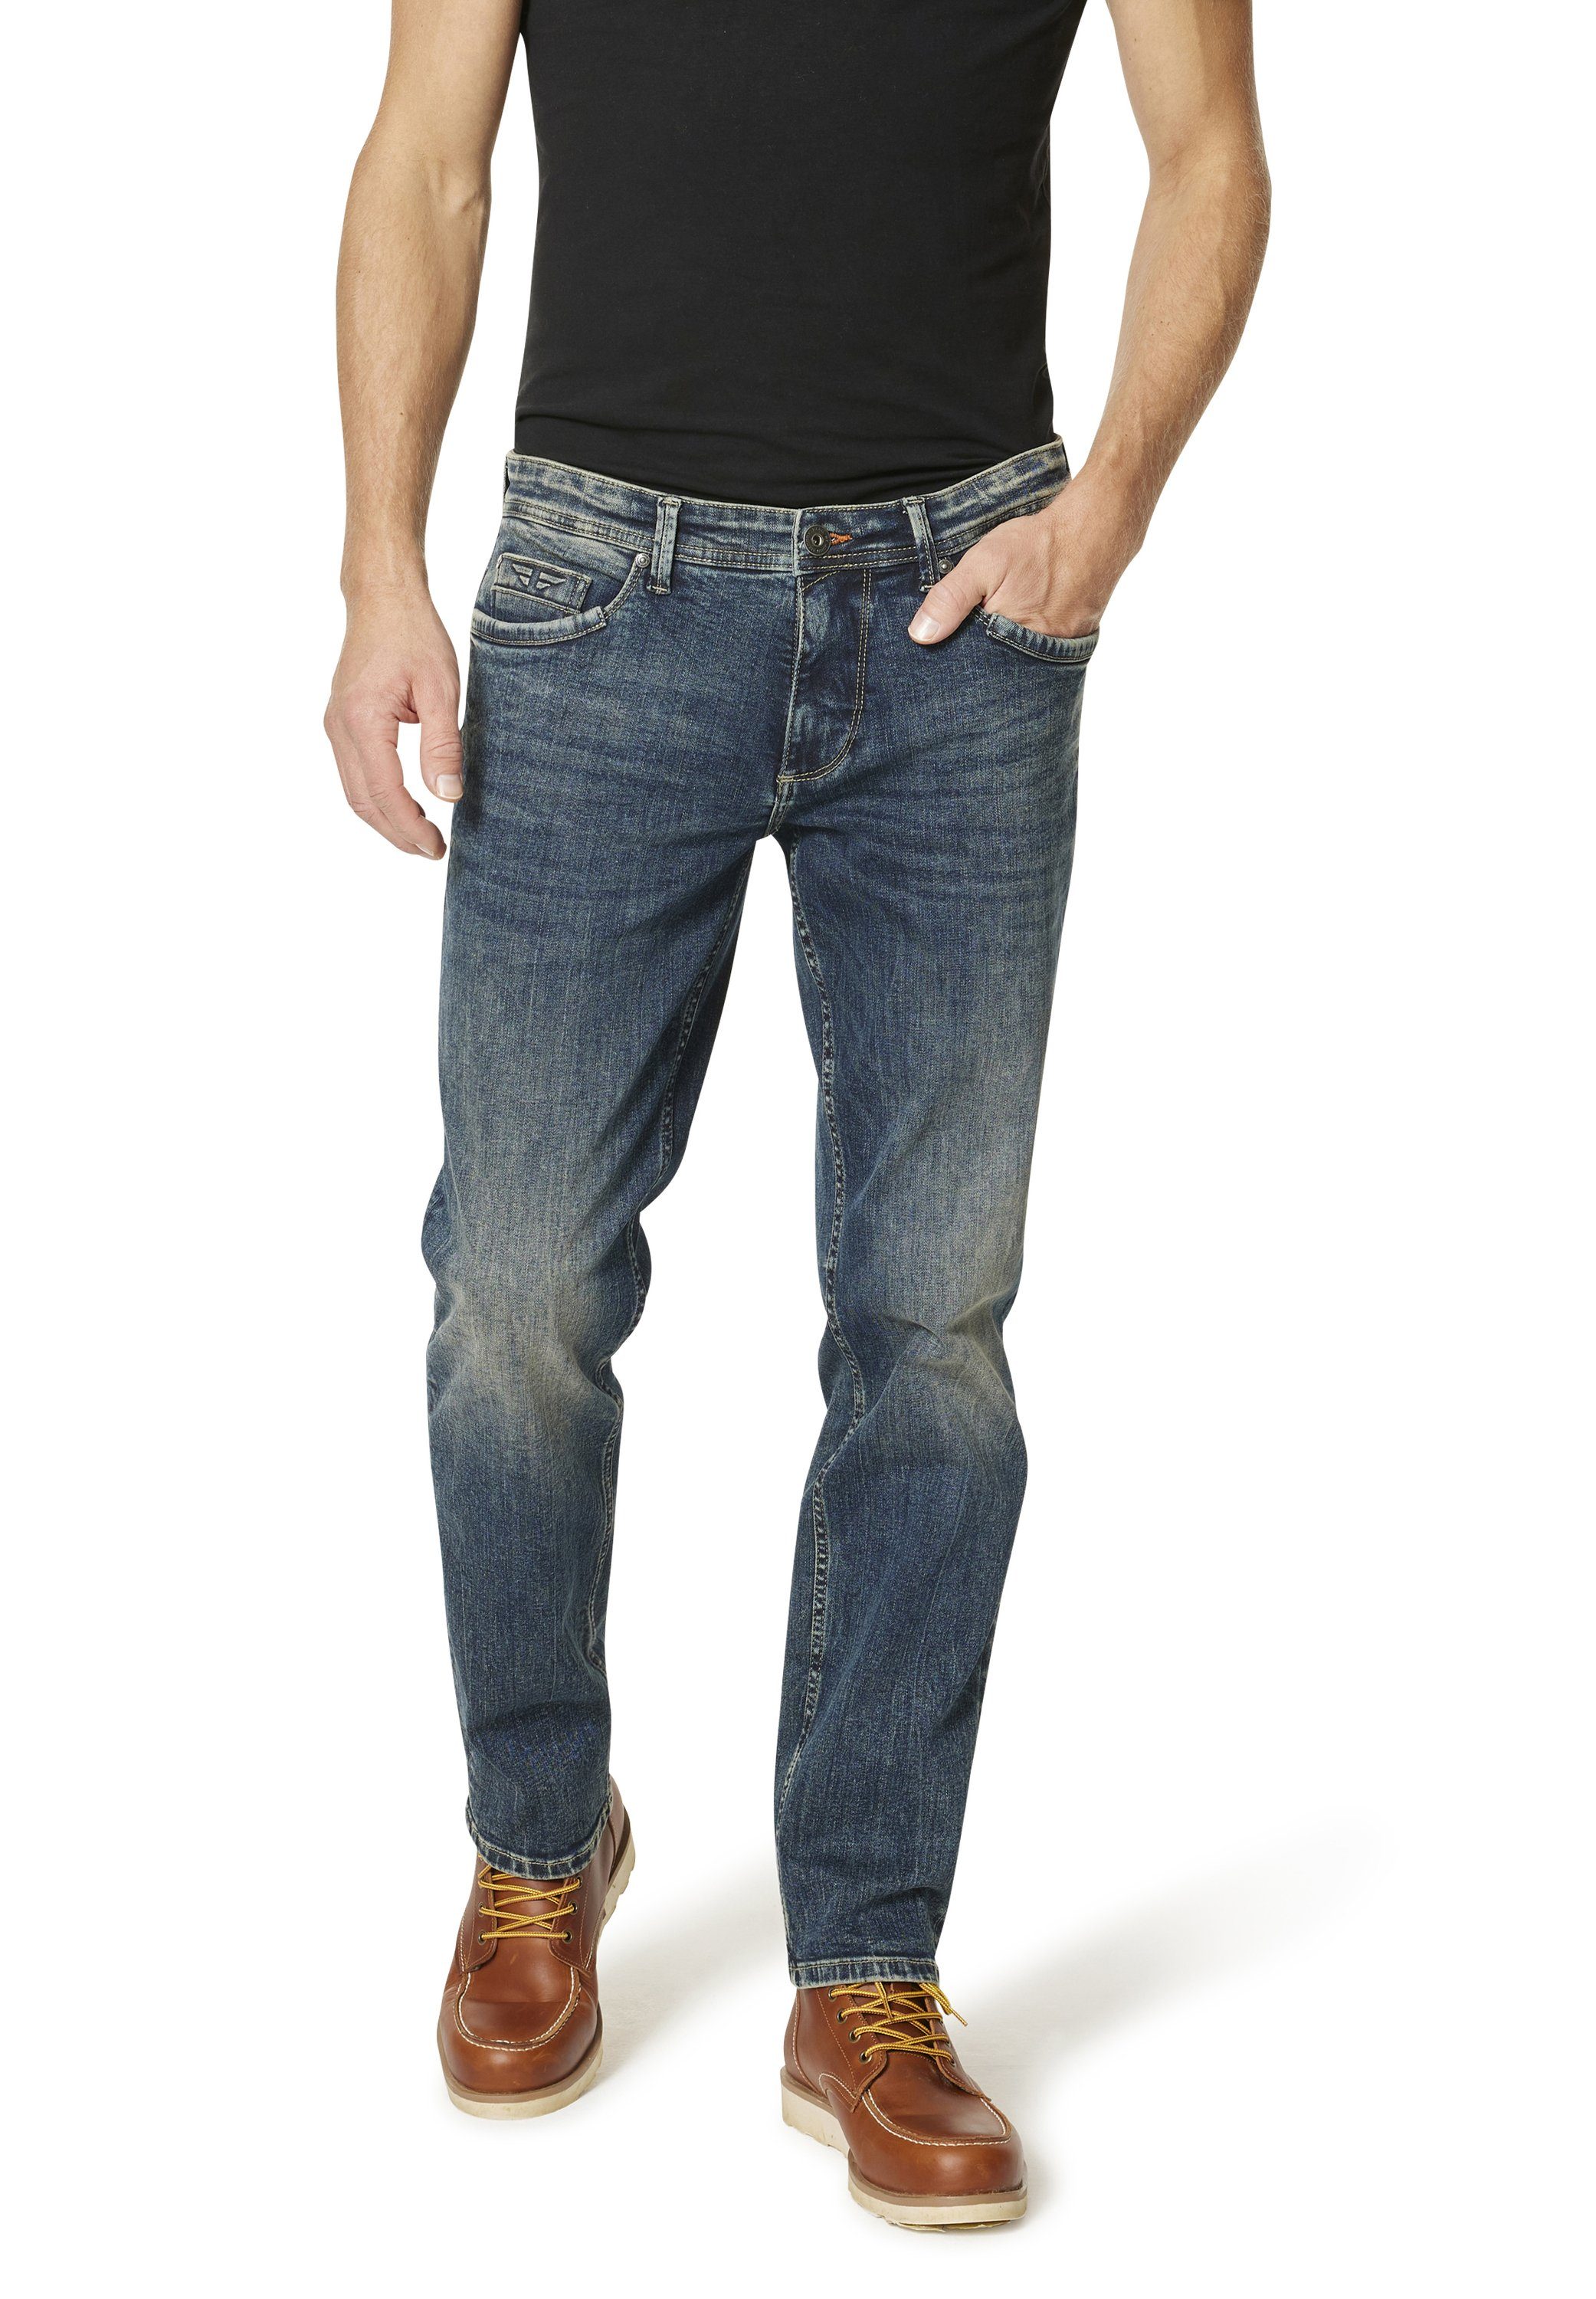 Baxter by John HERO Vintage Denim Fit 5-Pocket-Jeans Medoox used Relaxed